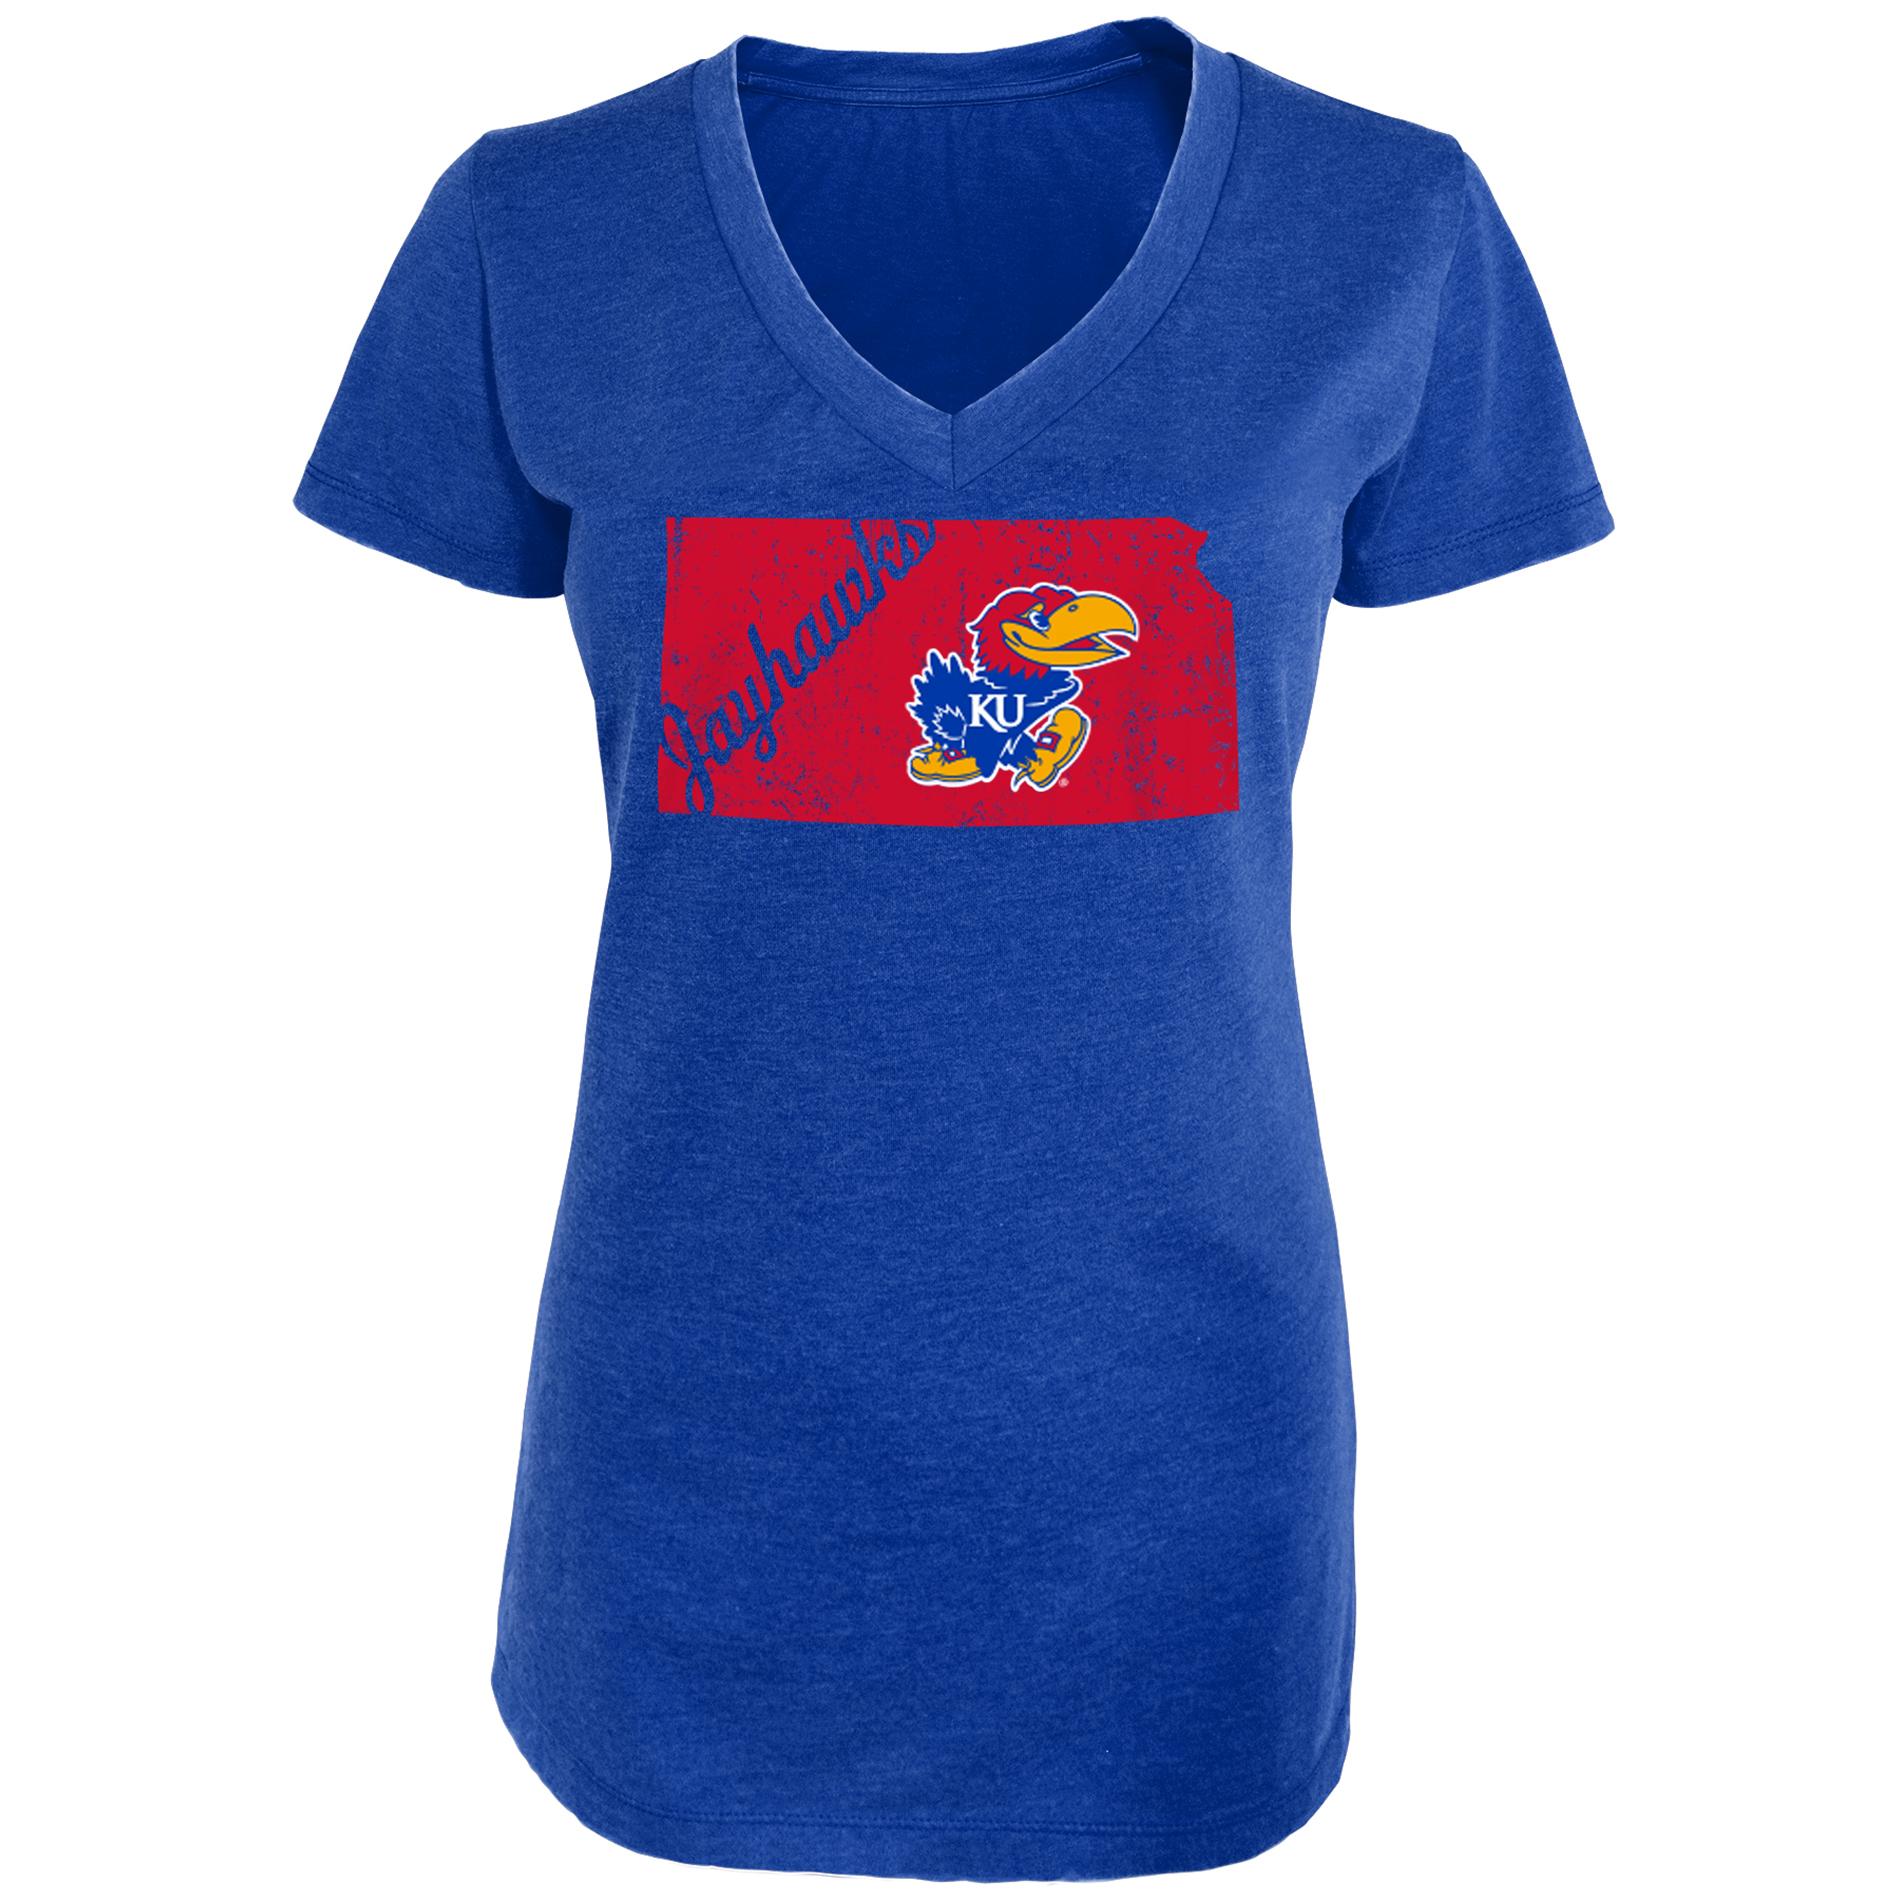 NCAA Women's Graphic T-Shirt - Kansas